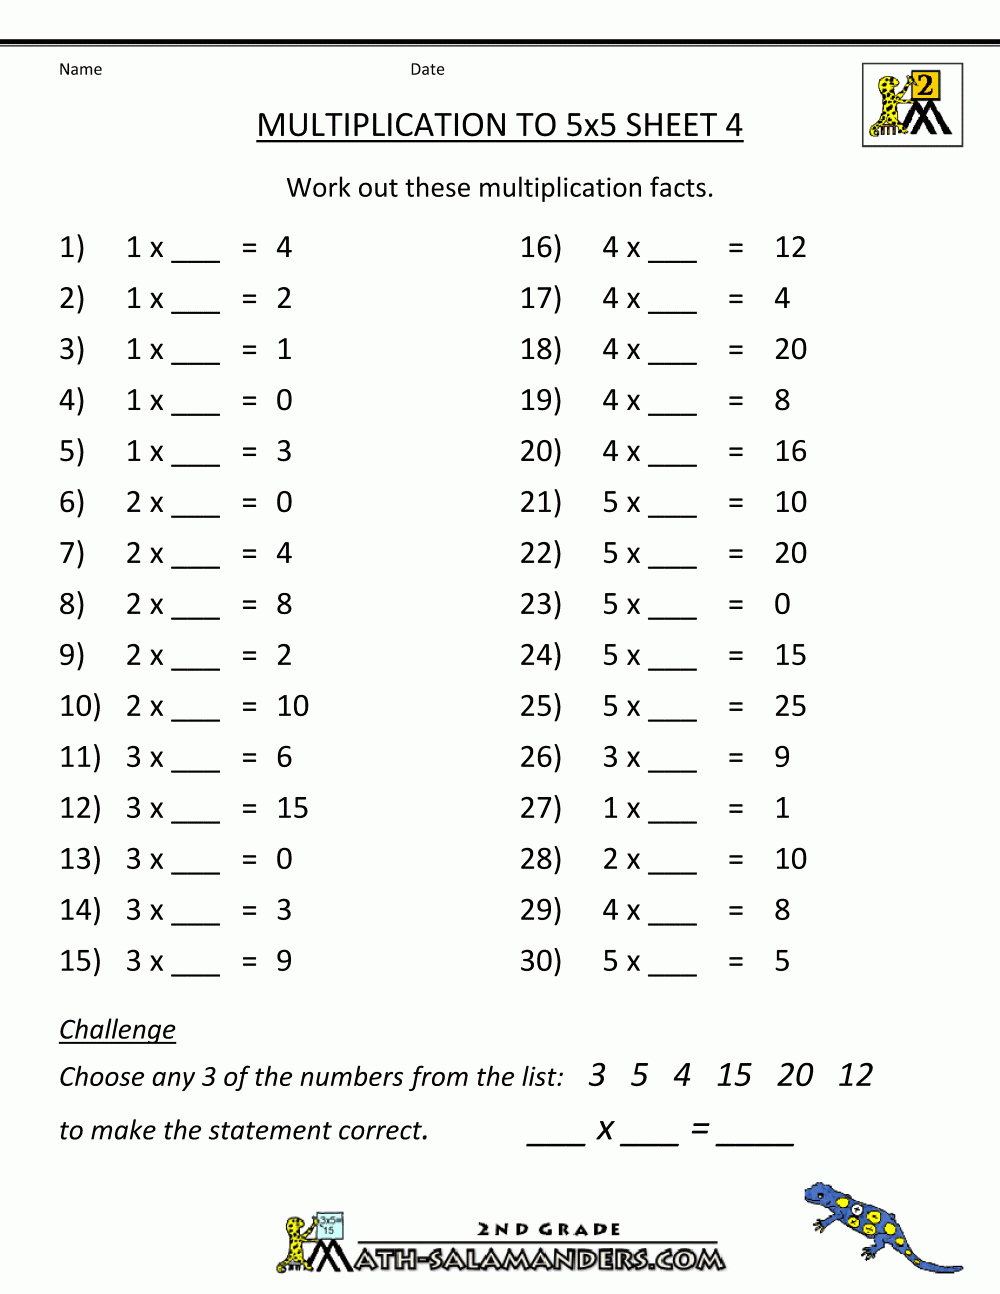 2 times table multiplication practice worksheet